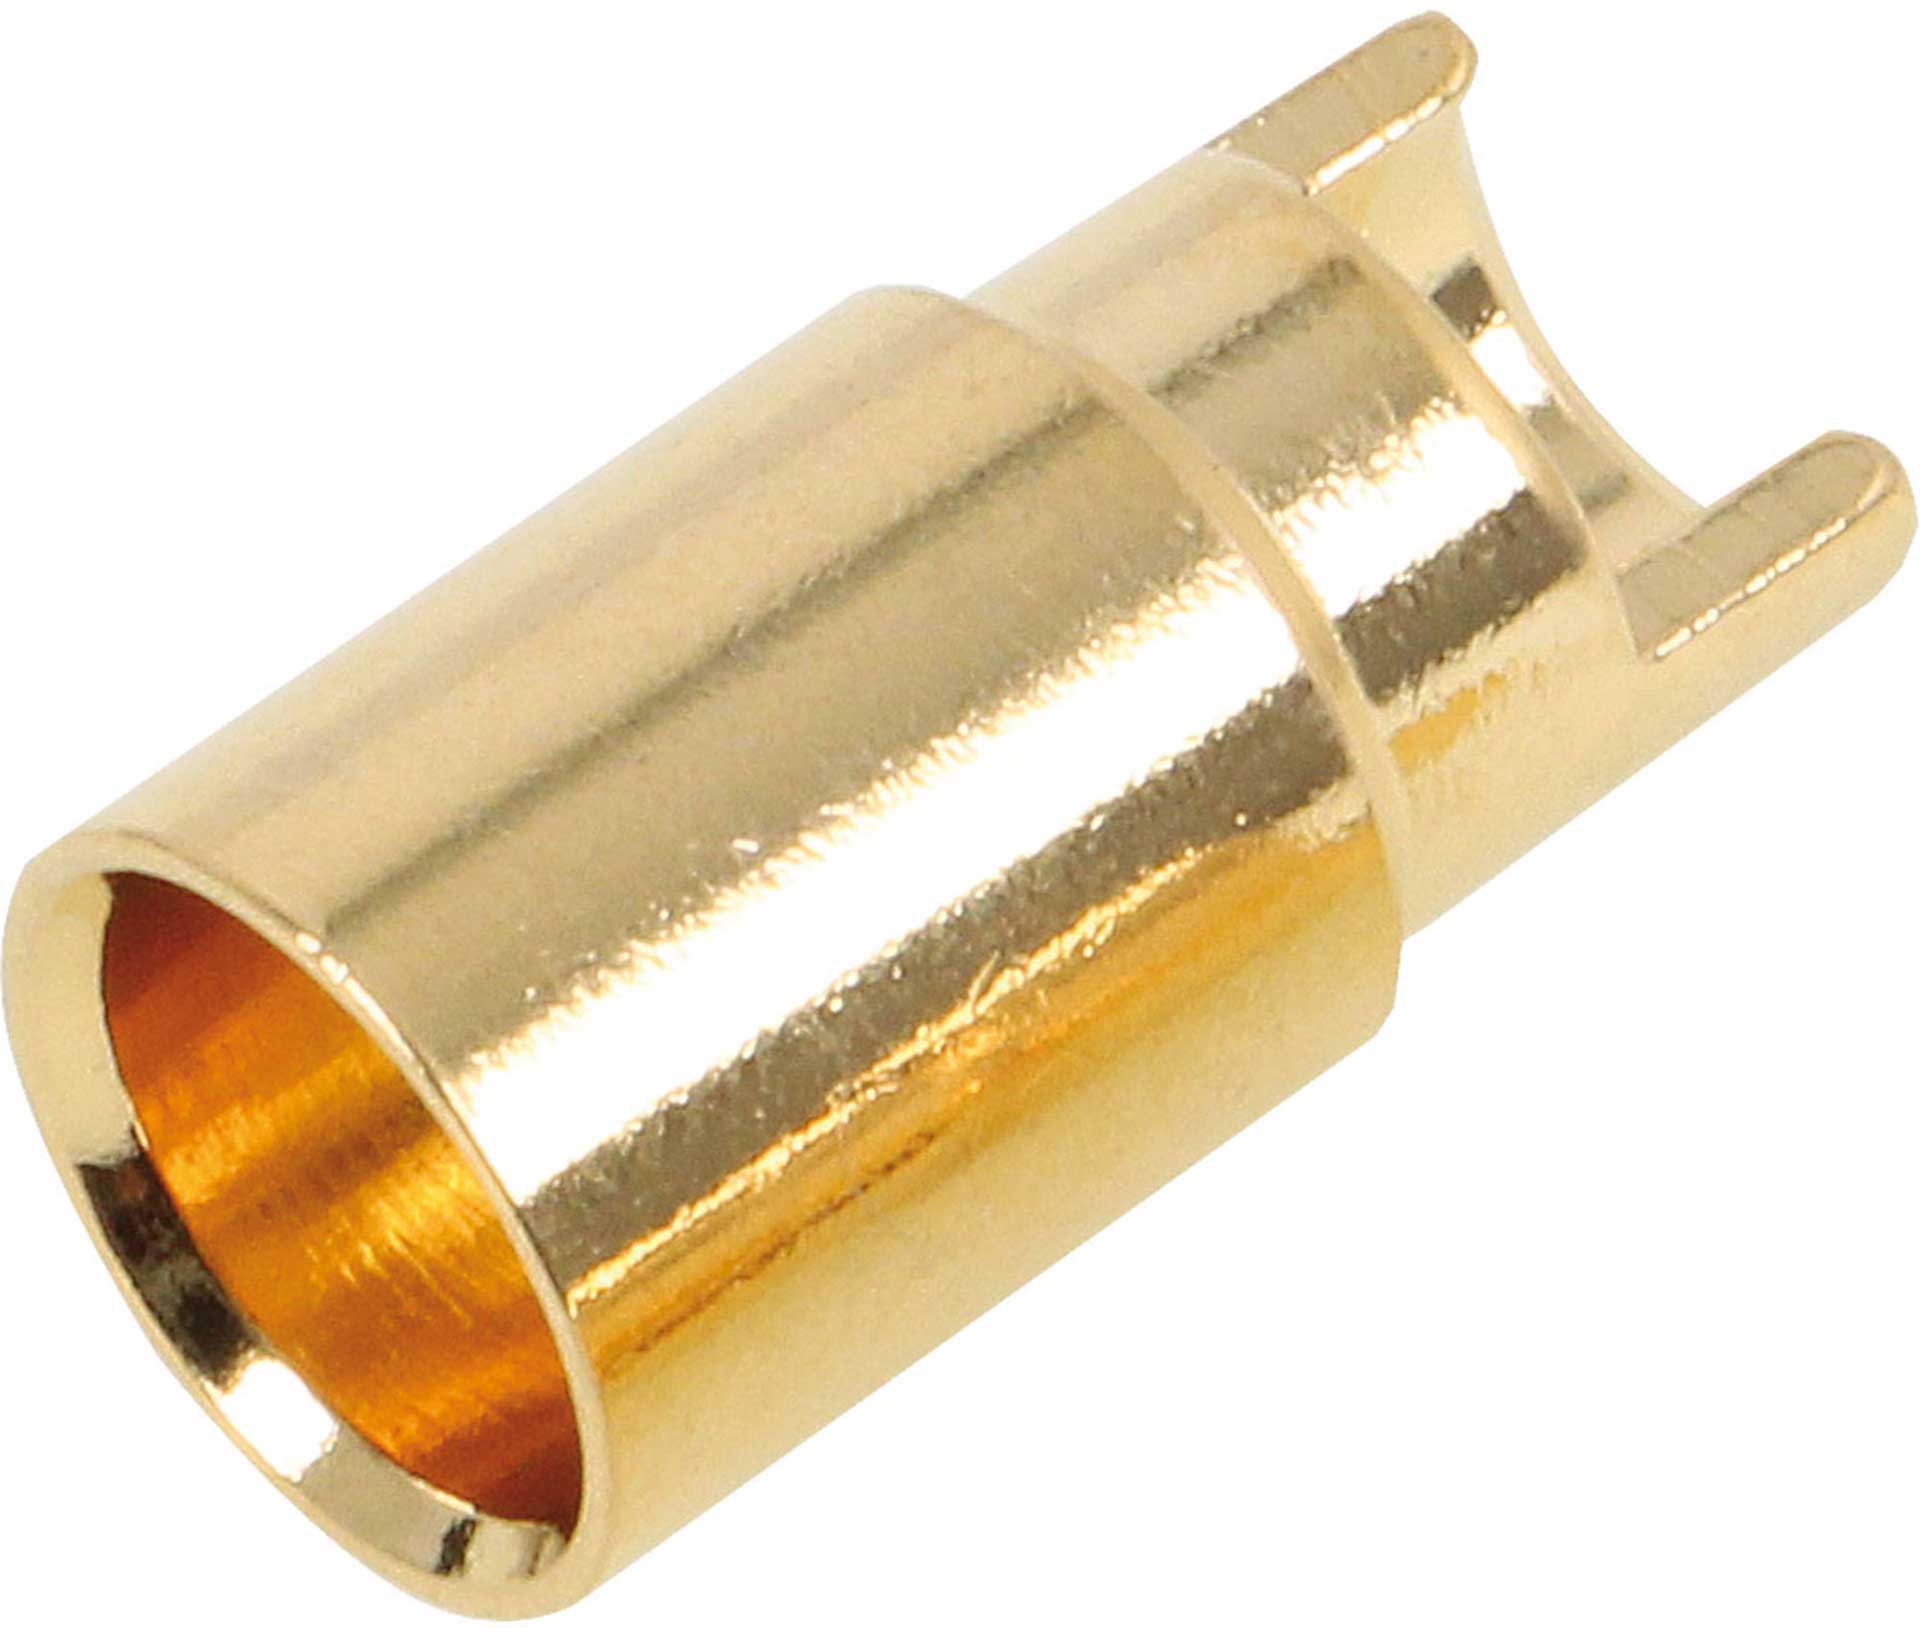 Robbe Modellsport Goldplug connectors 6mm female 5pcs